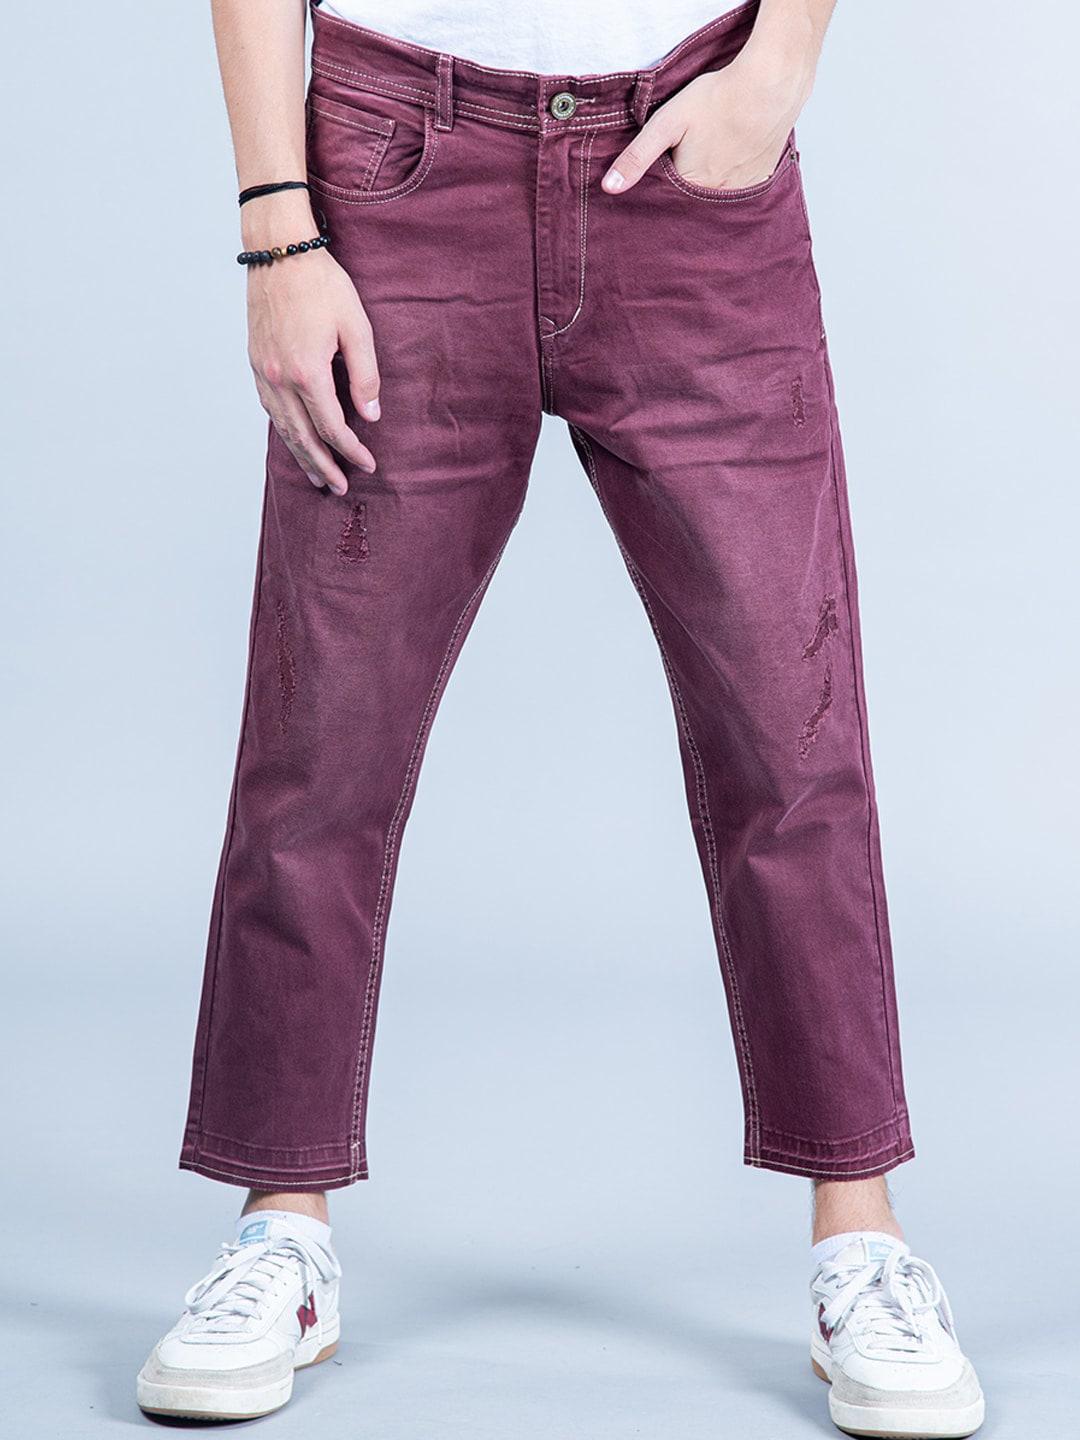 tistabene-men-comfort-slim-fit-light-fade-low-distress-cropped-cotton-jeans